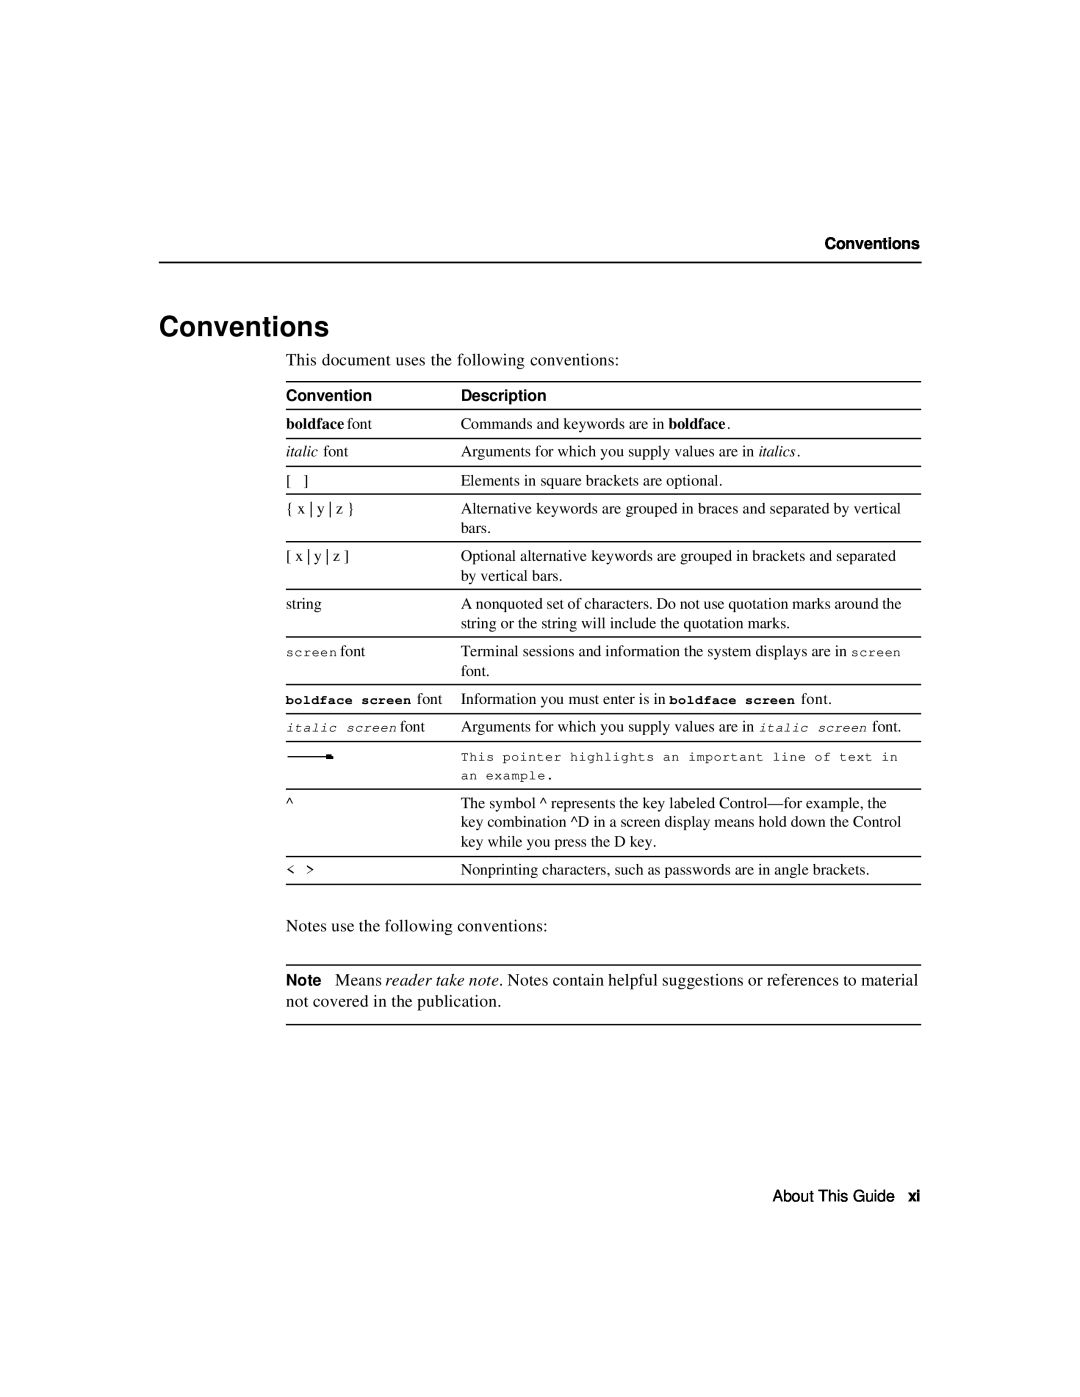 Cisco Systems 78-6897-01 manual Conventions, Description, italic font 